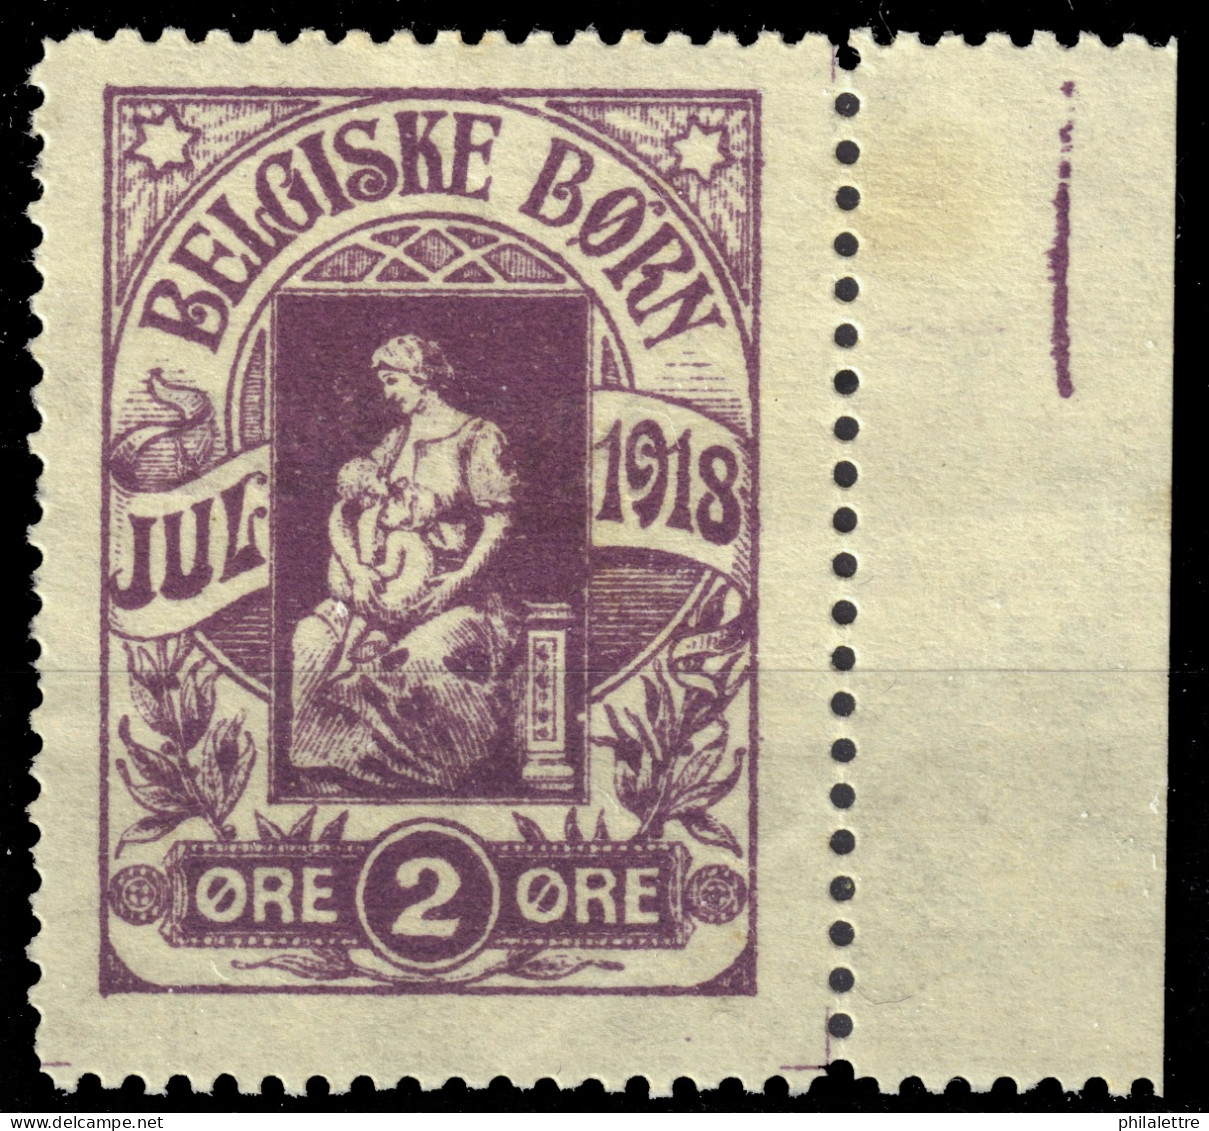 DANEMARK / DENMARK - Christmas 1918 - 2øre Purple "BELGISKE BØRN" (Belgian Children) Charity Stamp (marked NORGE On Gum) - Noël